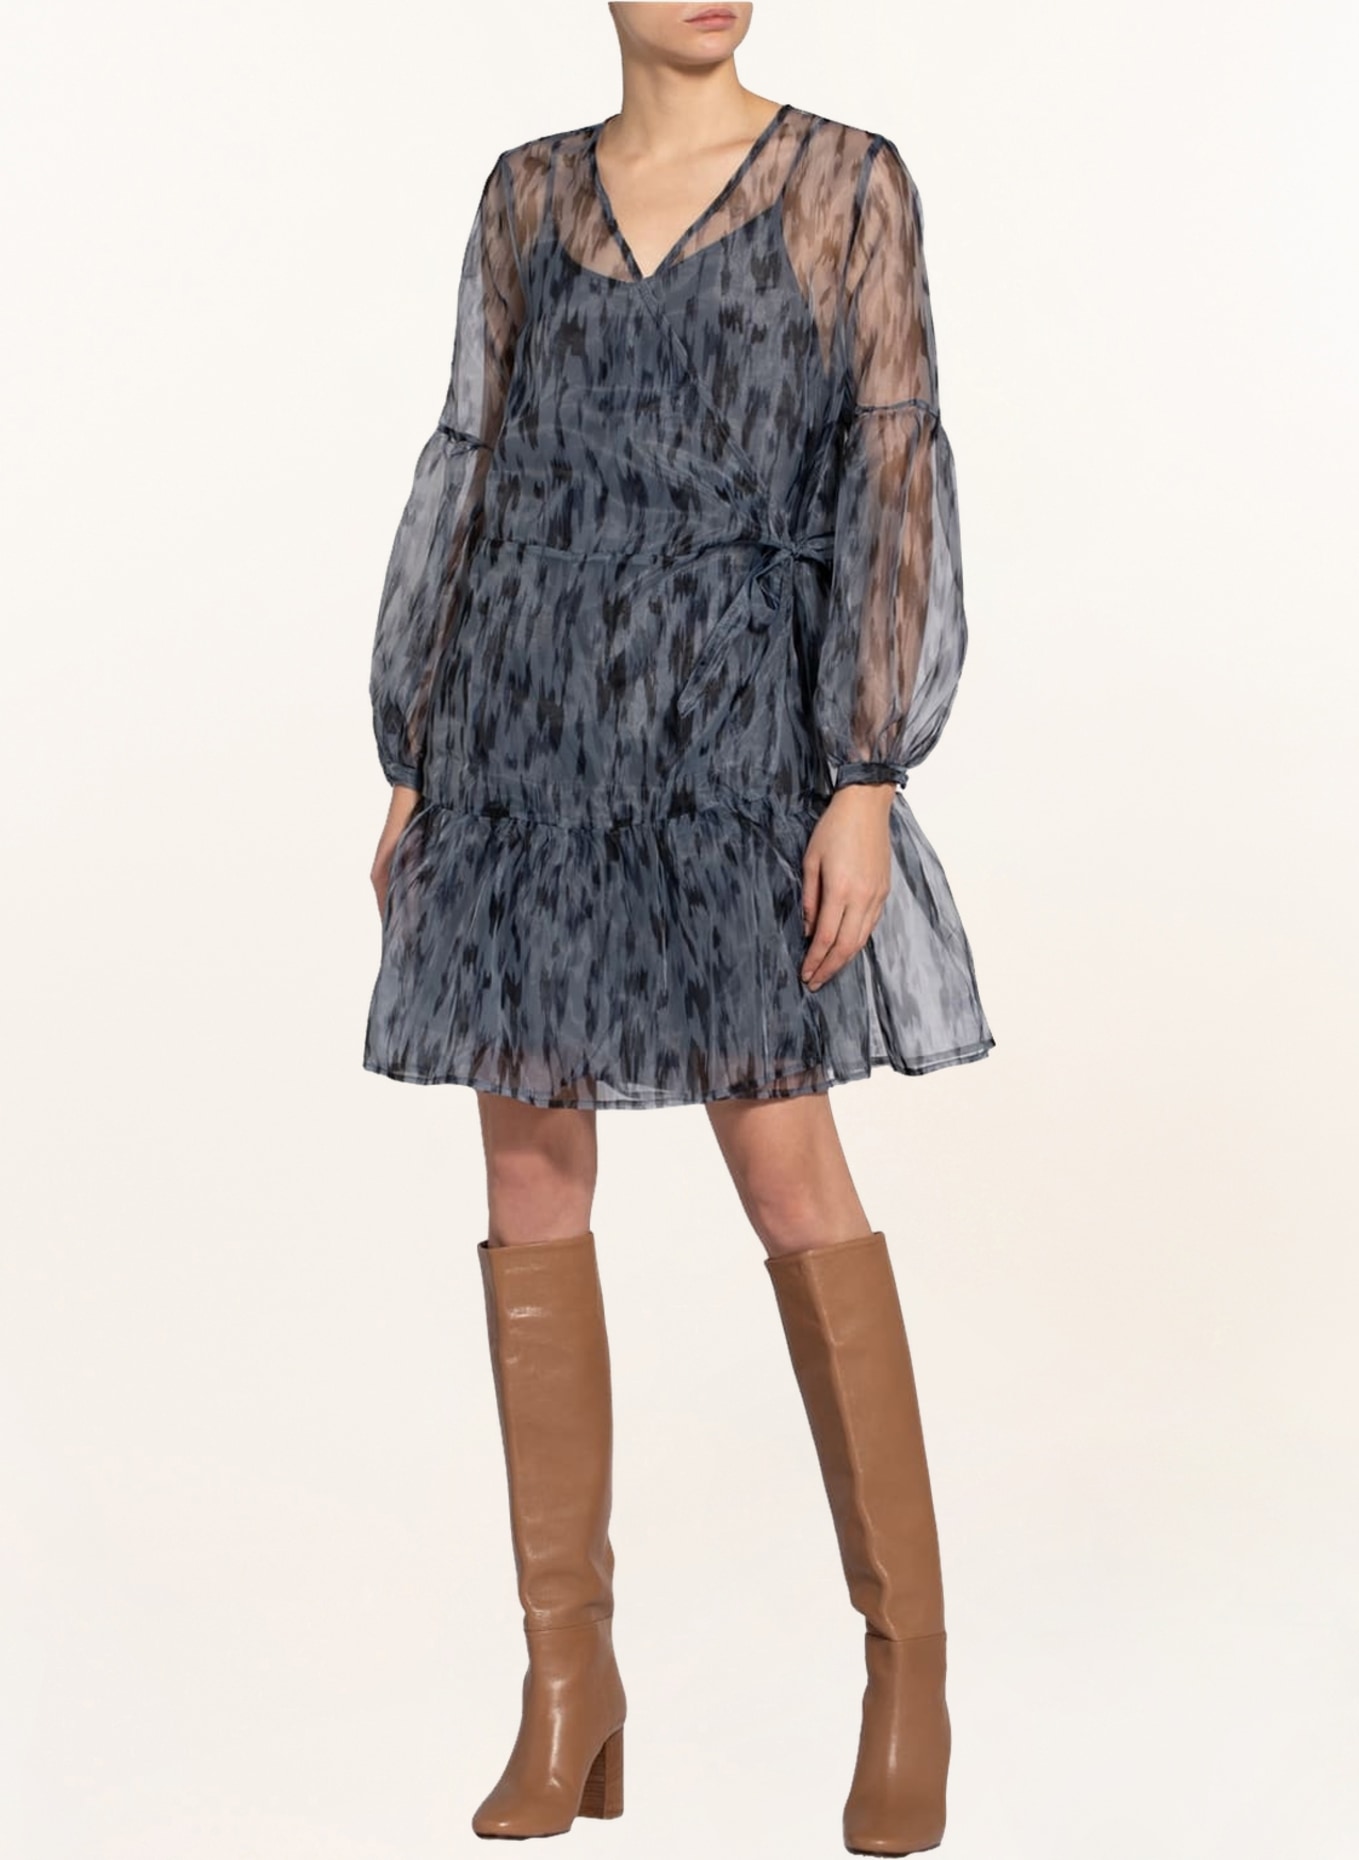 Chiara Ferragni Blurs The Line Between Dress and Lingerie